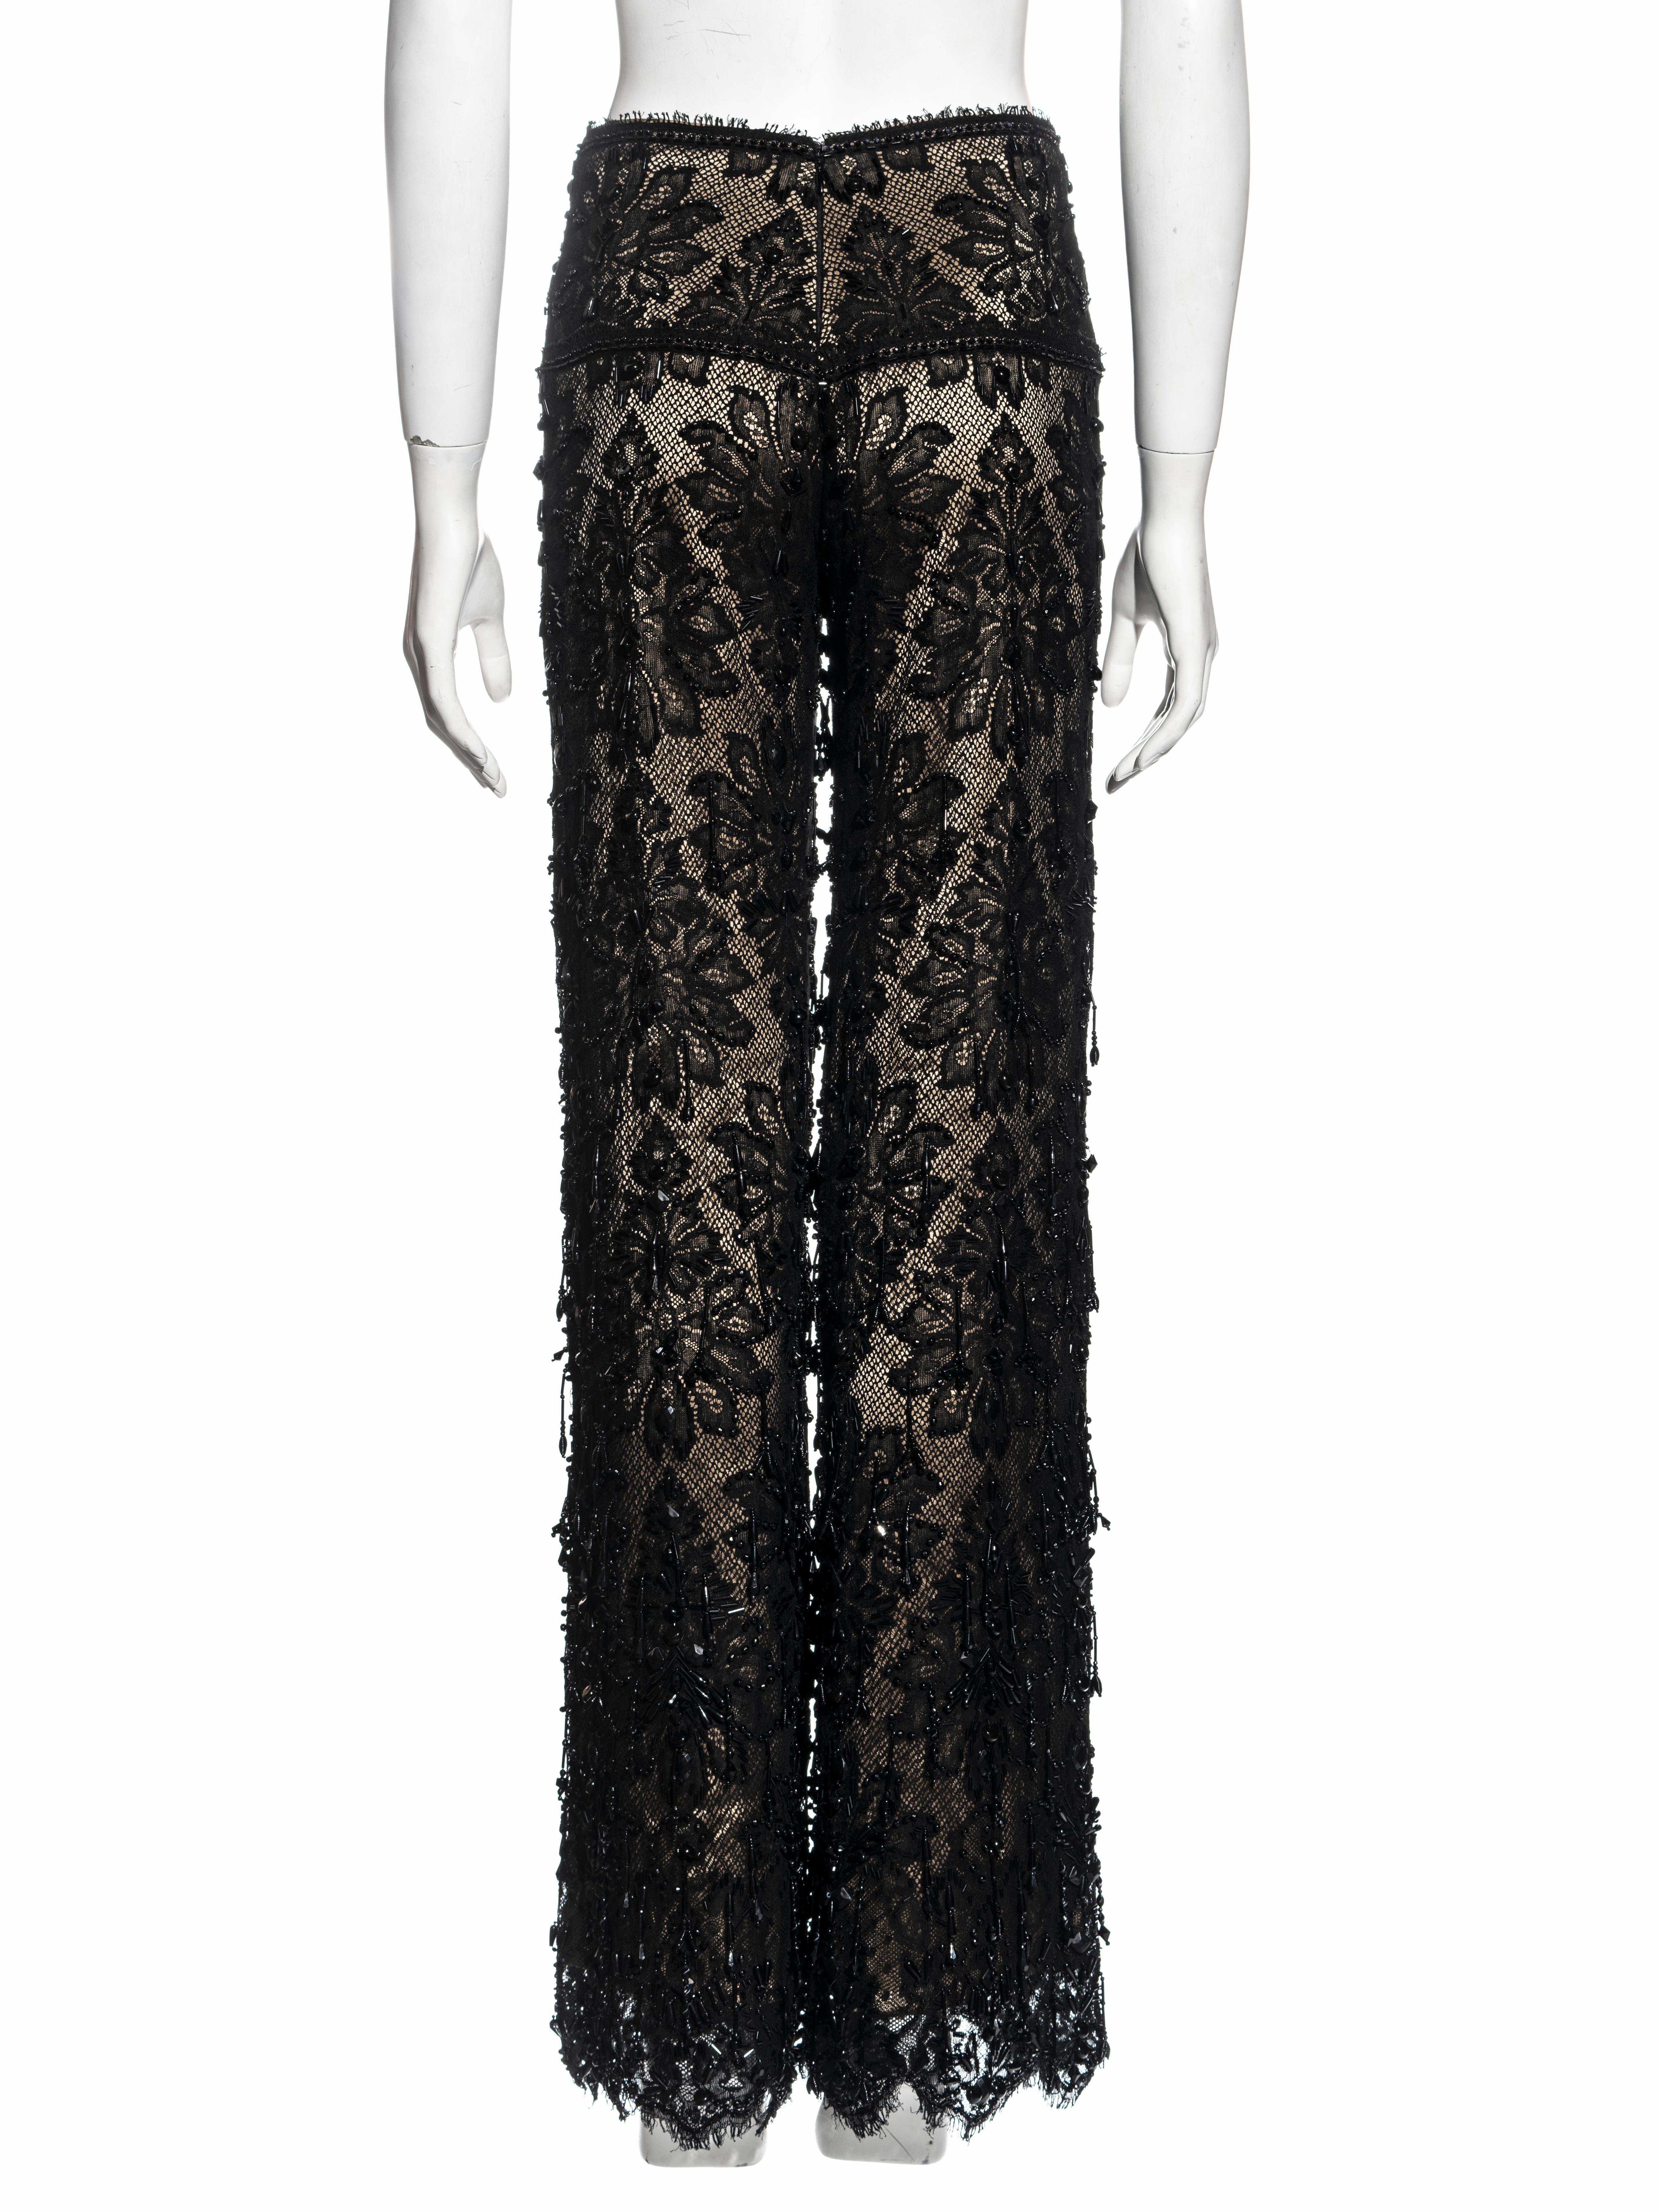 Gianfranco Ferré black beaded lace evening pants, ss 2002 For Sale 1